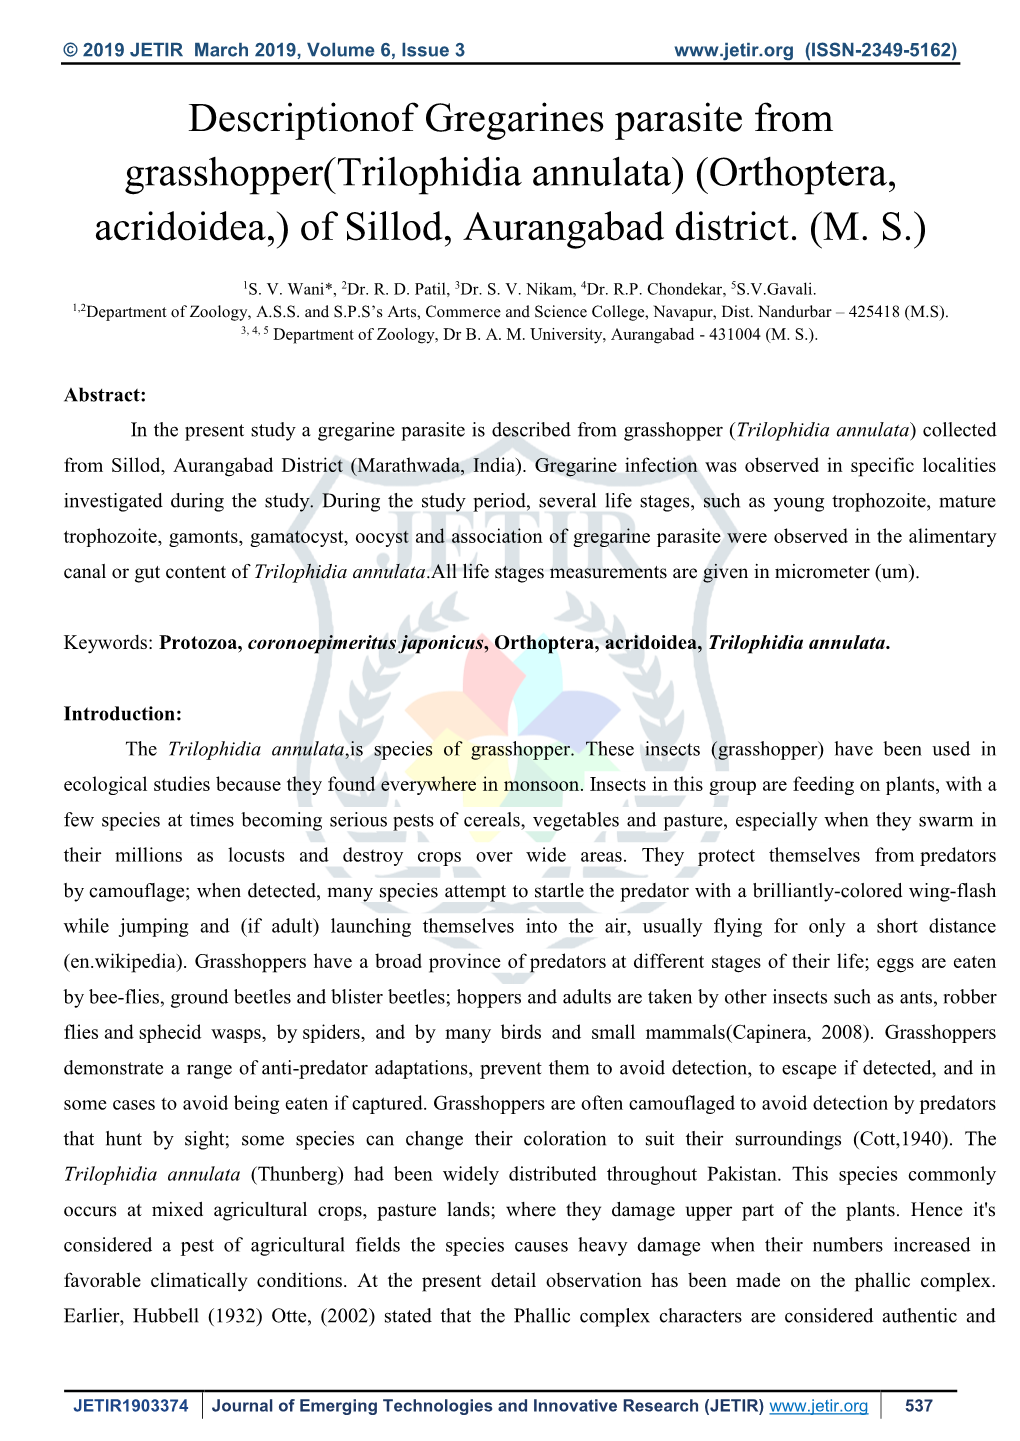 Descriptionof Gregarines Parasite from Grasshopper(Trilophidia Annulata) (Orthoptera, Acridoidea,) of Sillod, Aurangabad District